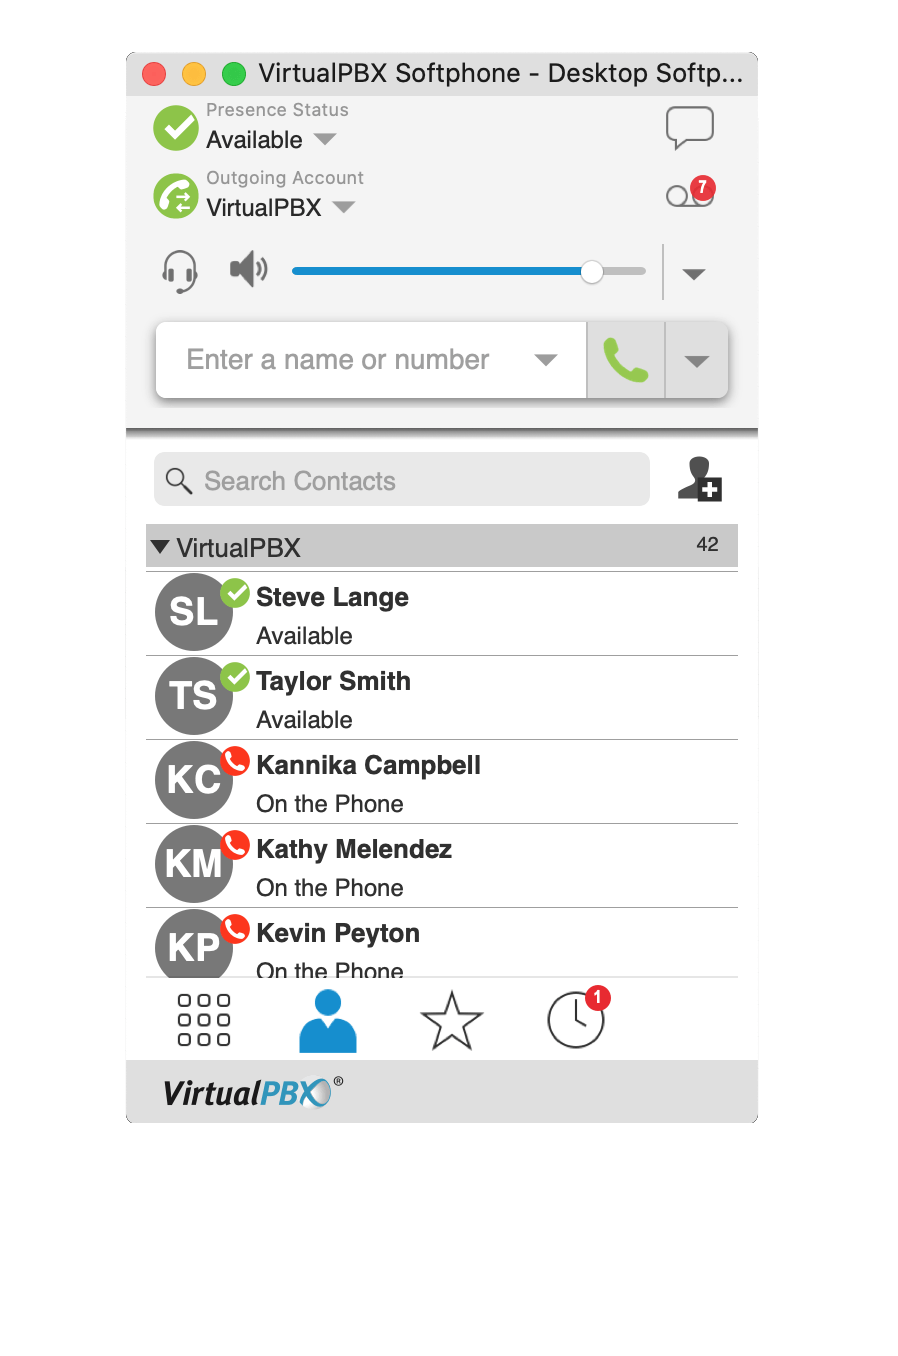 VirtualPBX Desktop Softphone Contact List